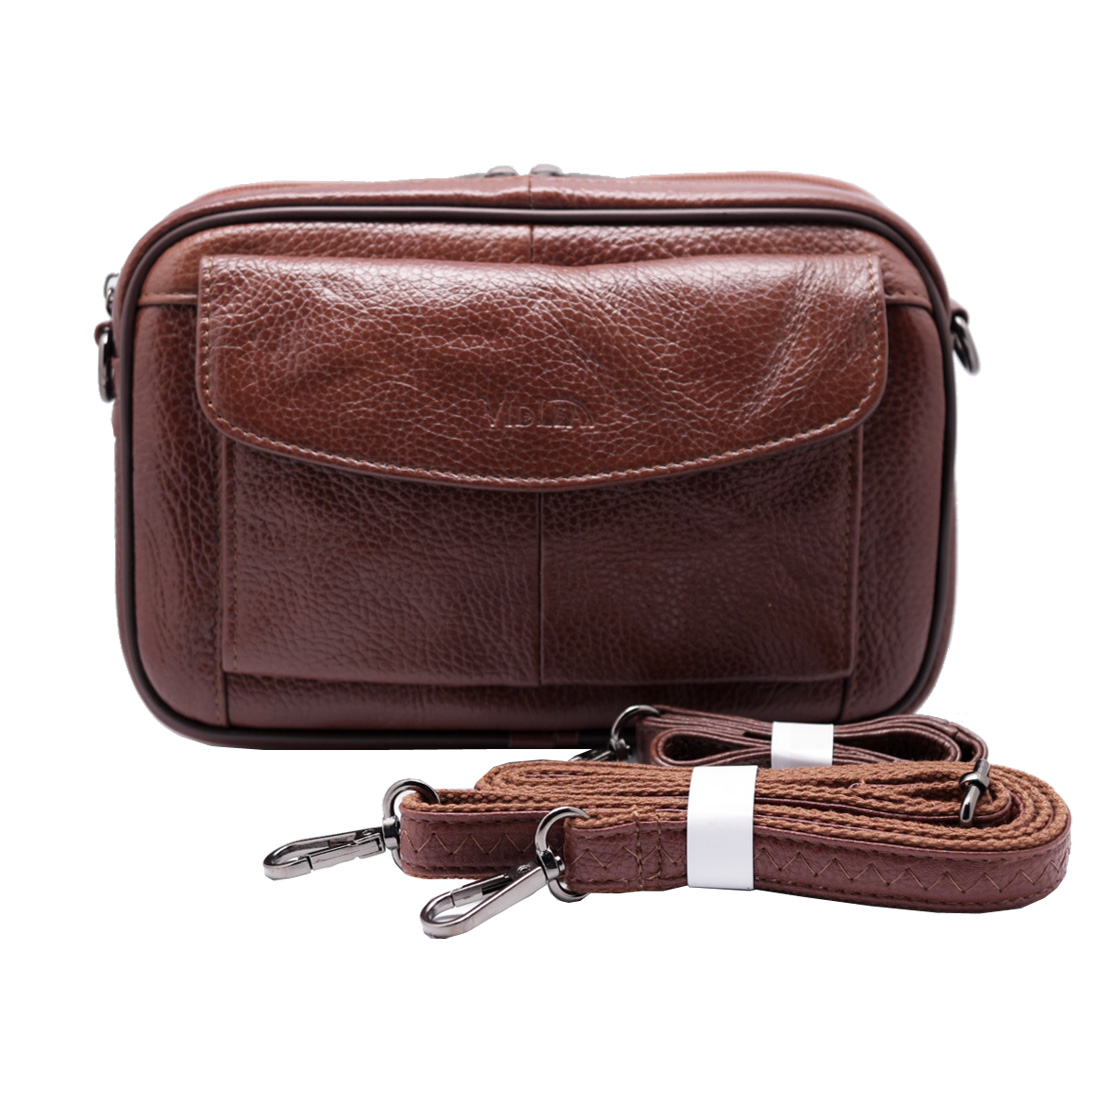 leather bags for men mens messenger bag tan brown cowhide leather handbag JIOJPYV